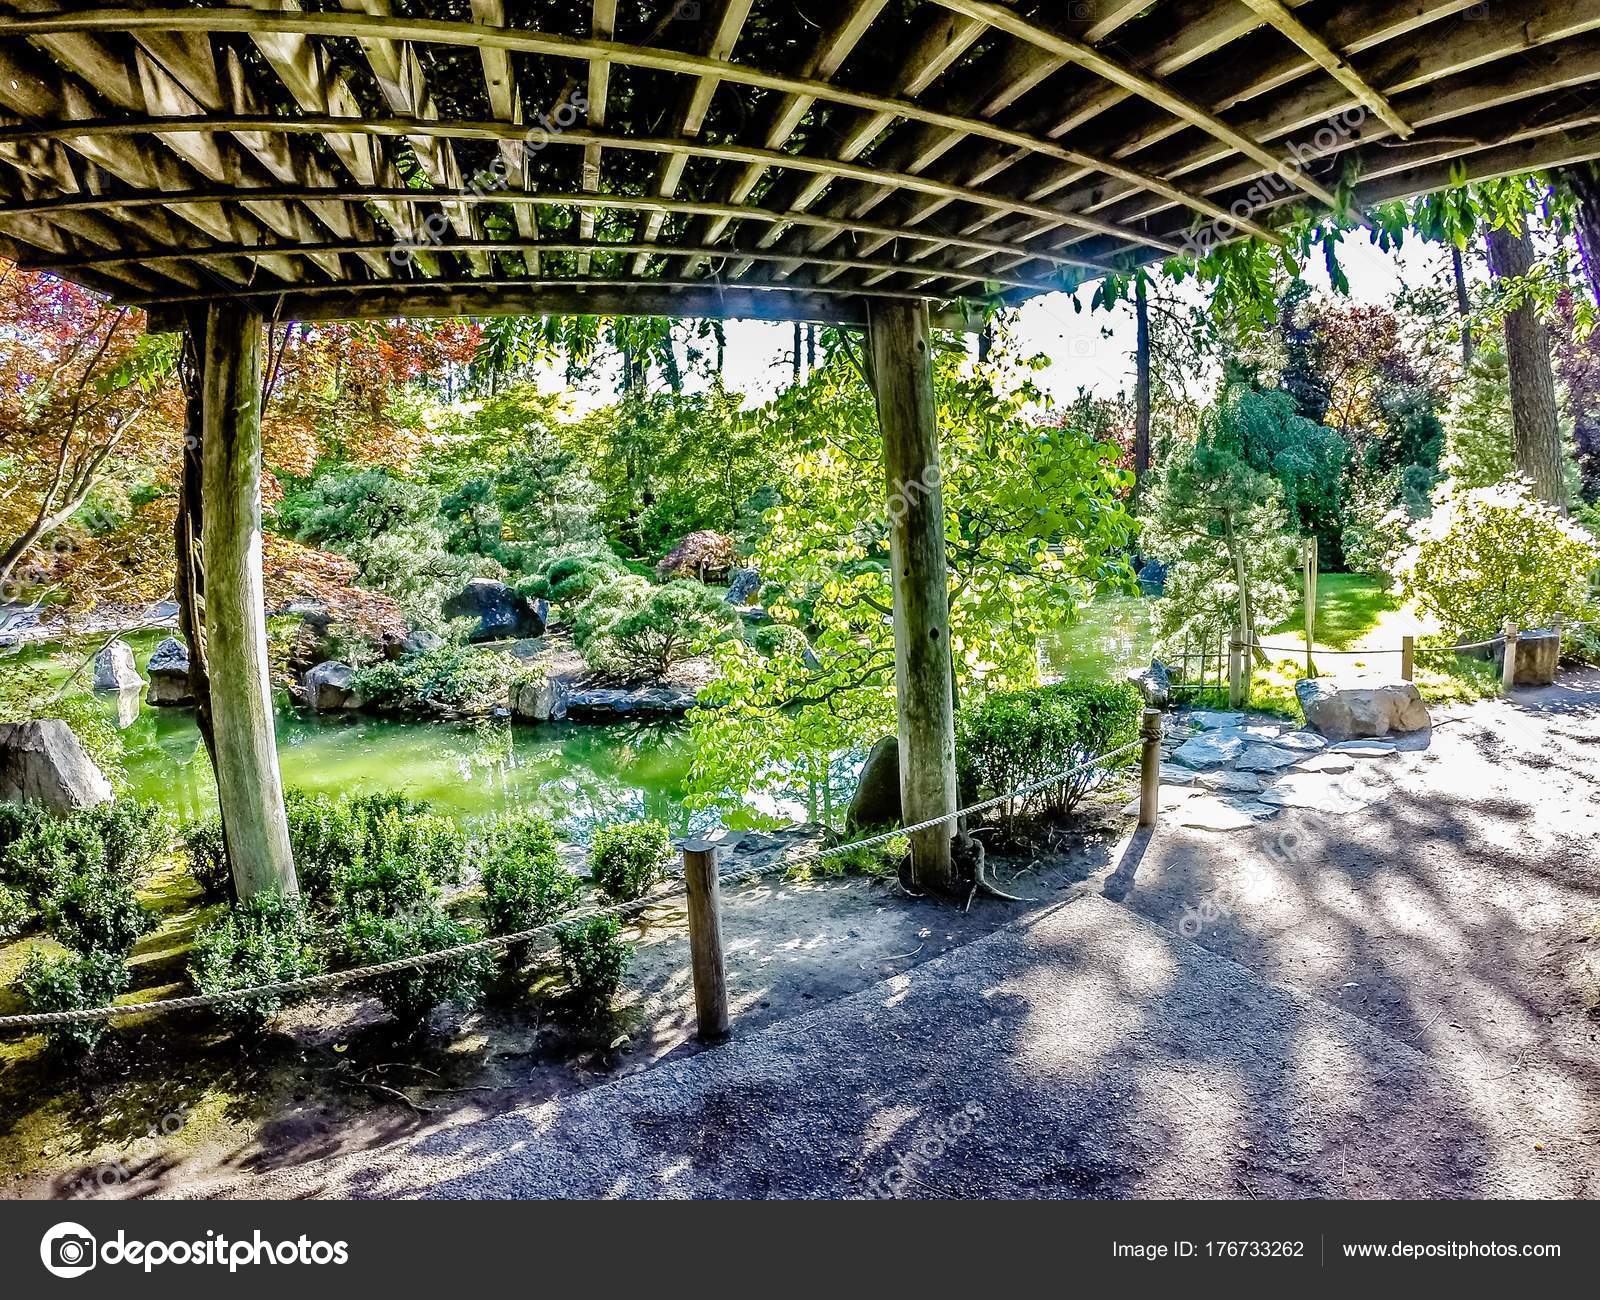 The Beautiful Japanese Garden At Manito Park In Spokane Washing